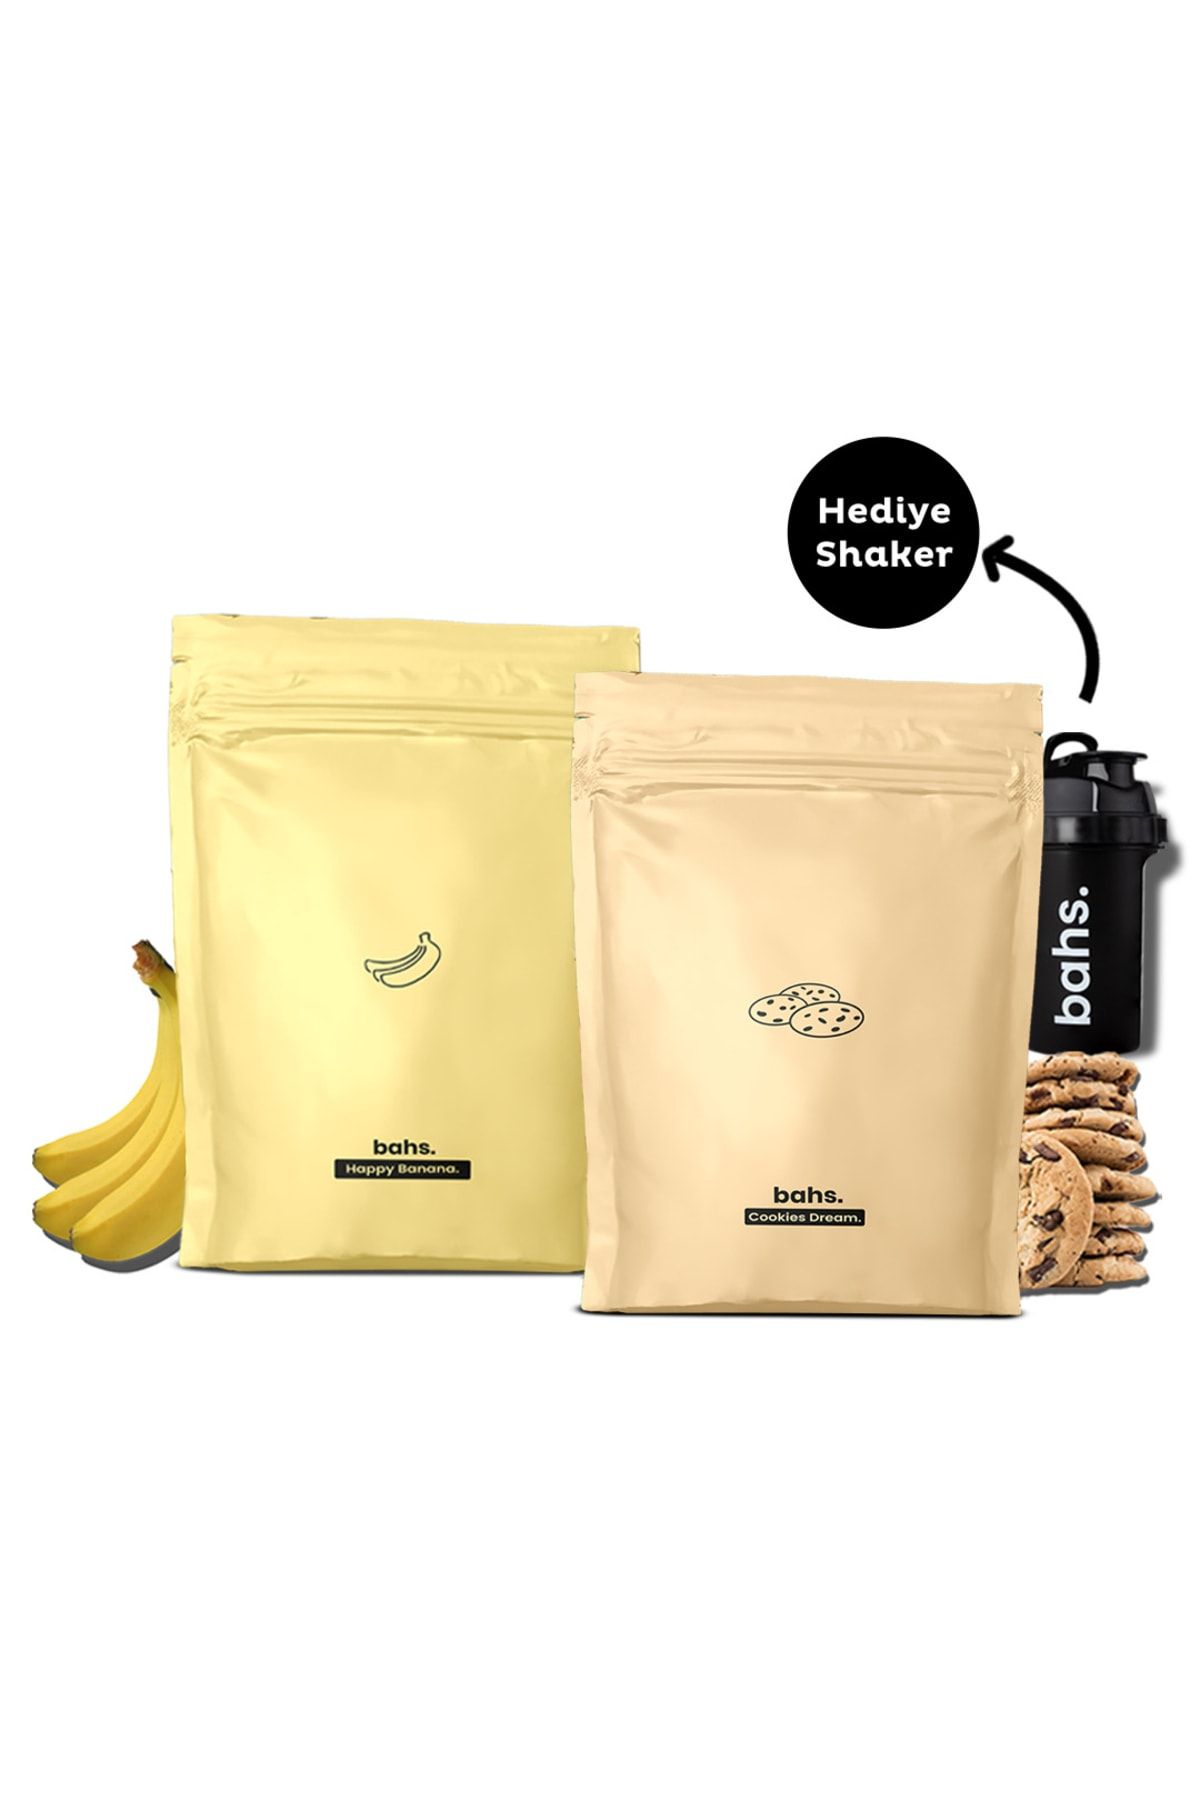 Bahs Proteinli Öğün Tozu | 1 Happy Banana 1 Cookies Dream | 1 Shaker Hediye